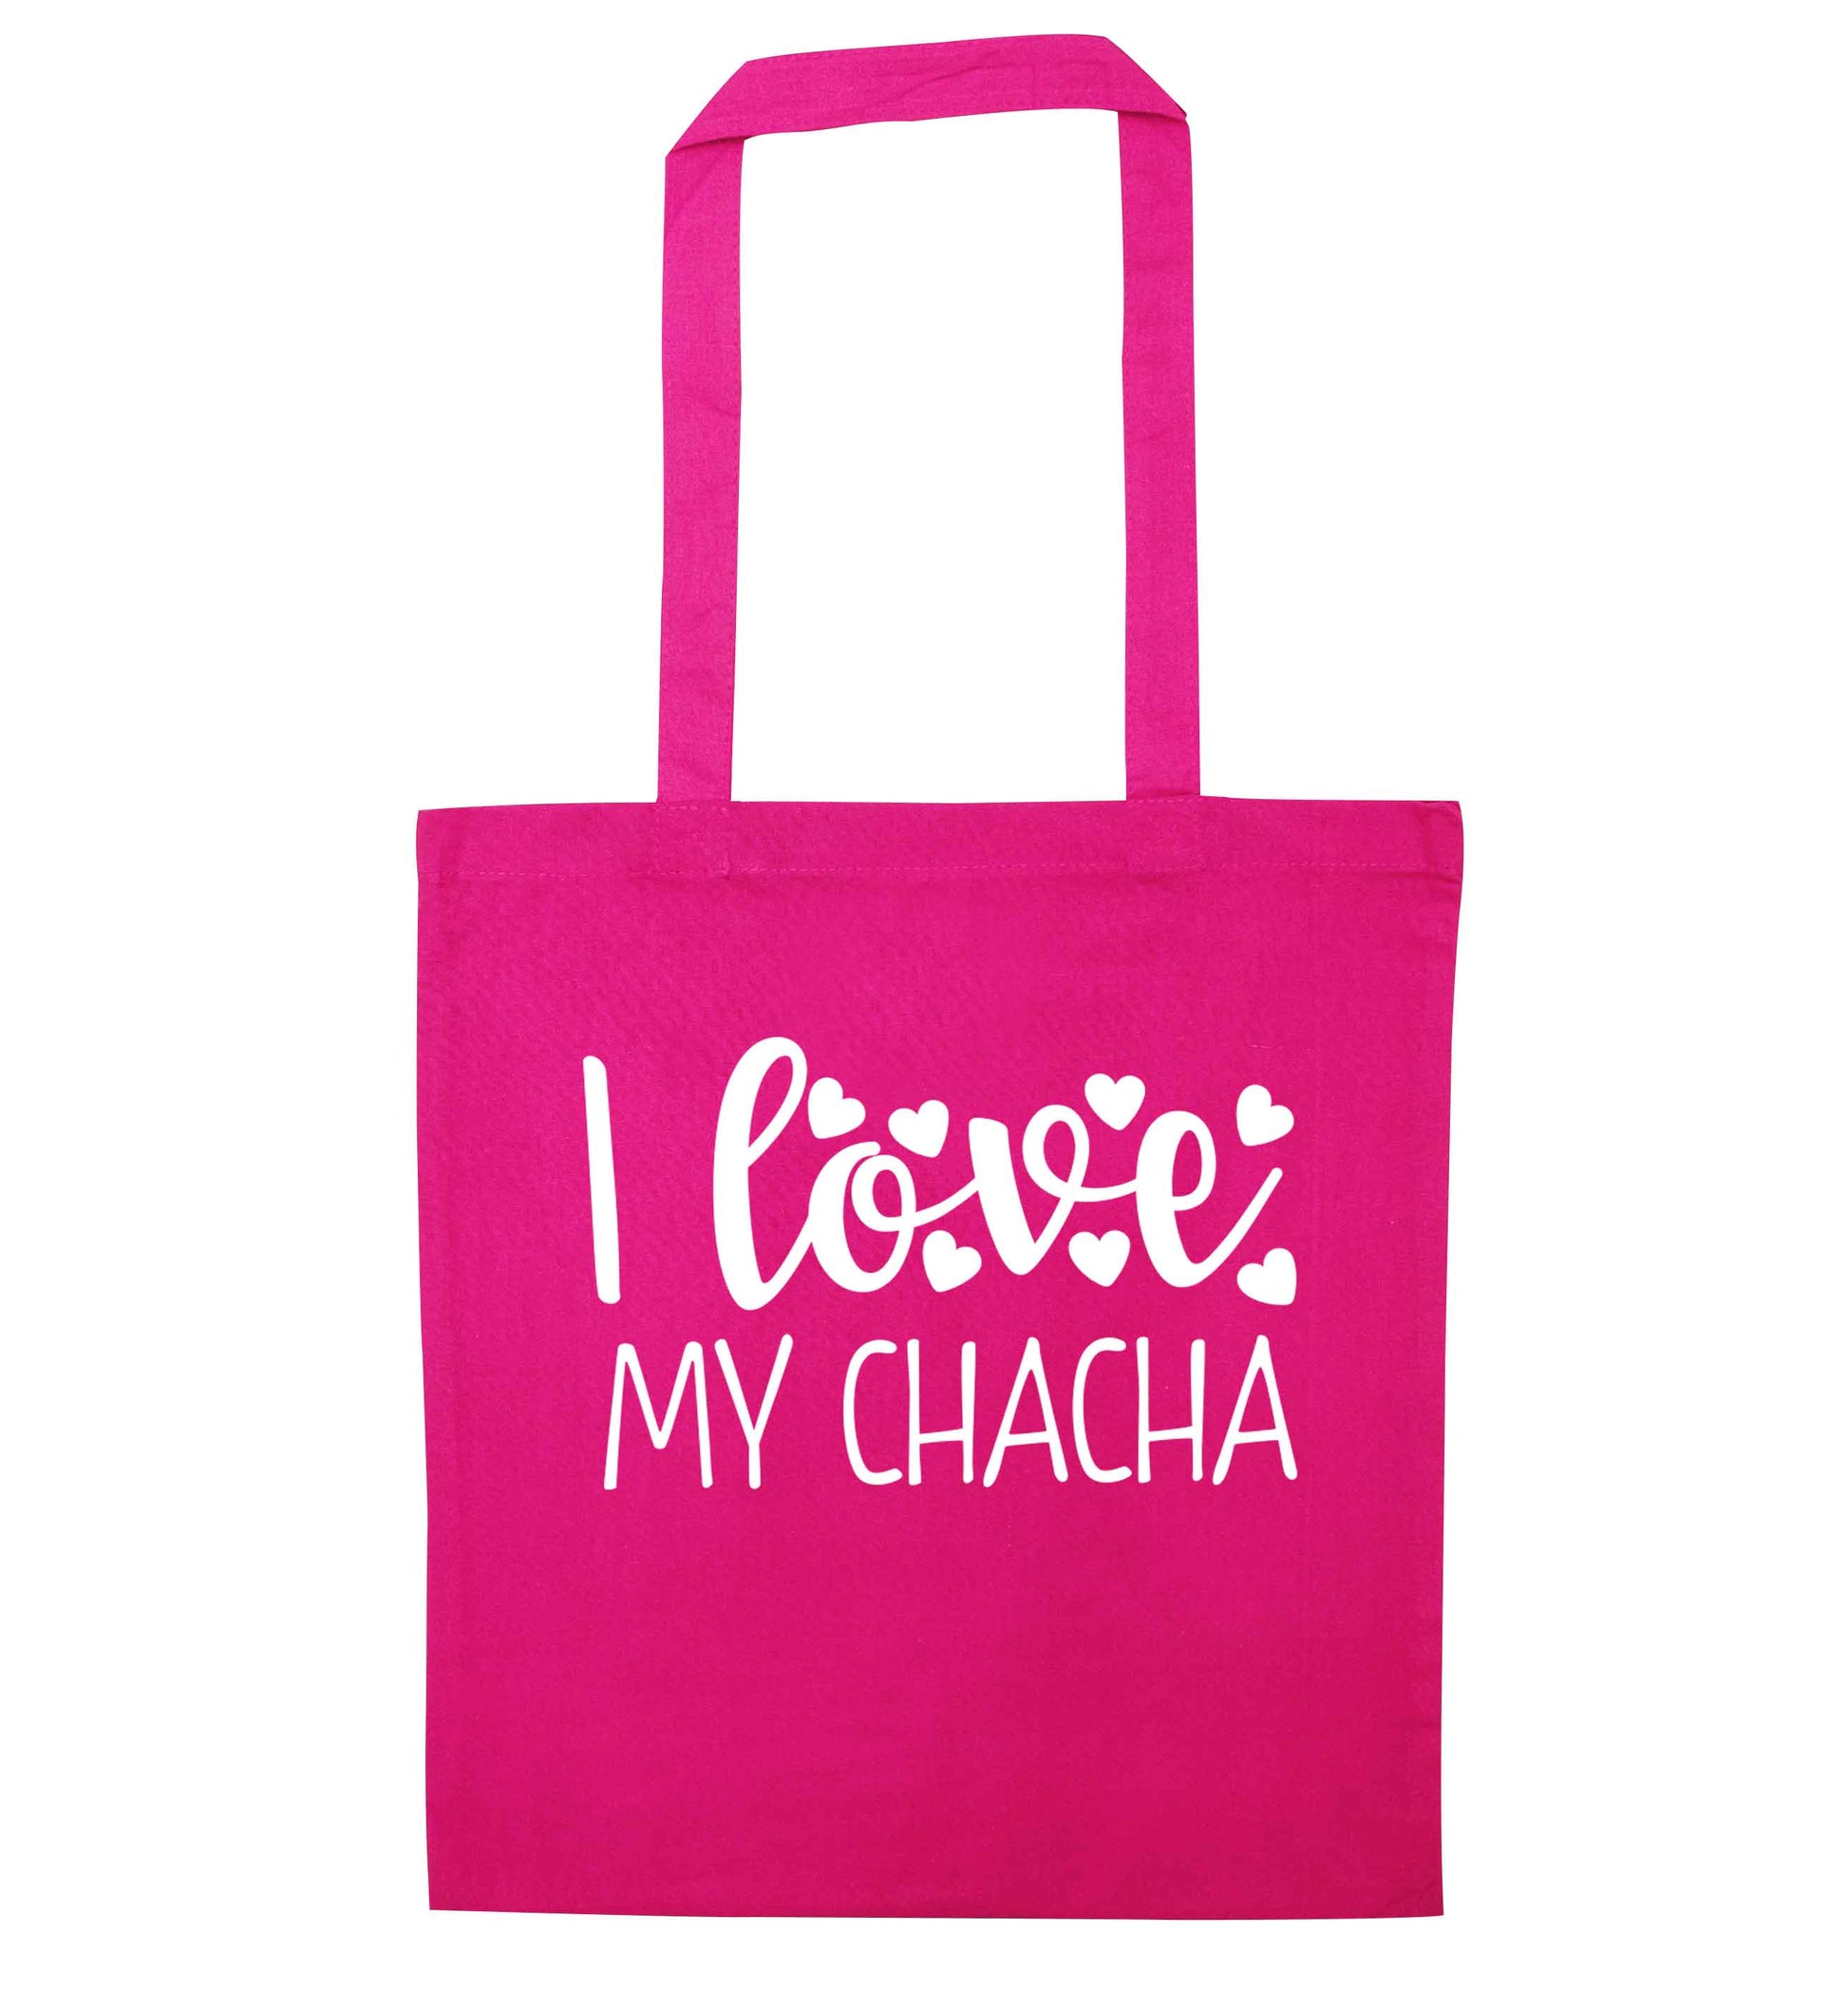 I love my chacha pink tote bag